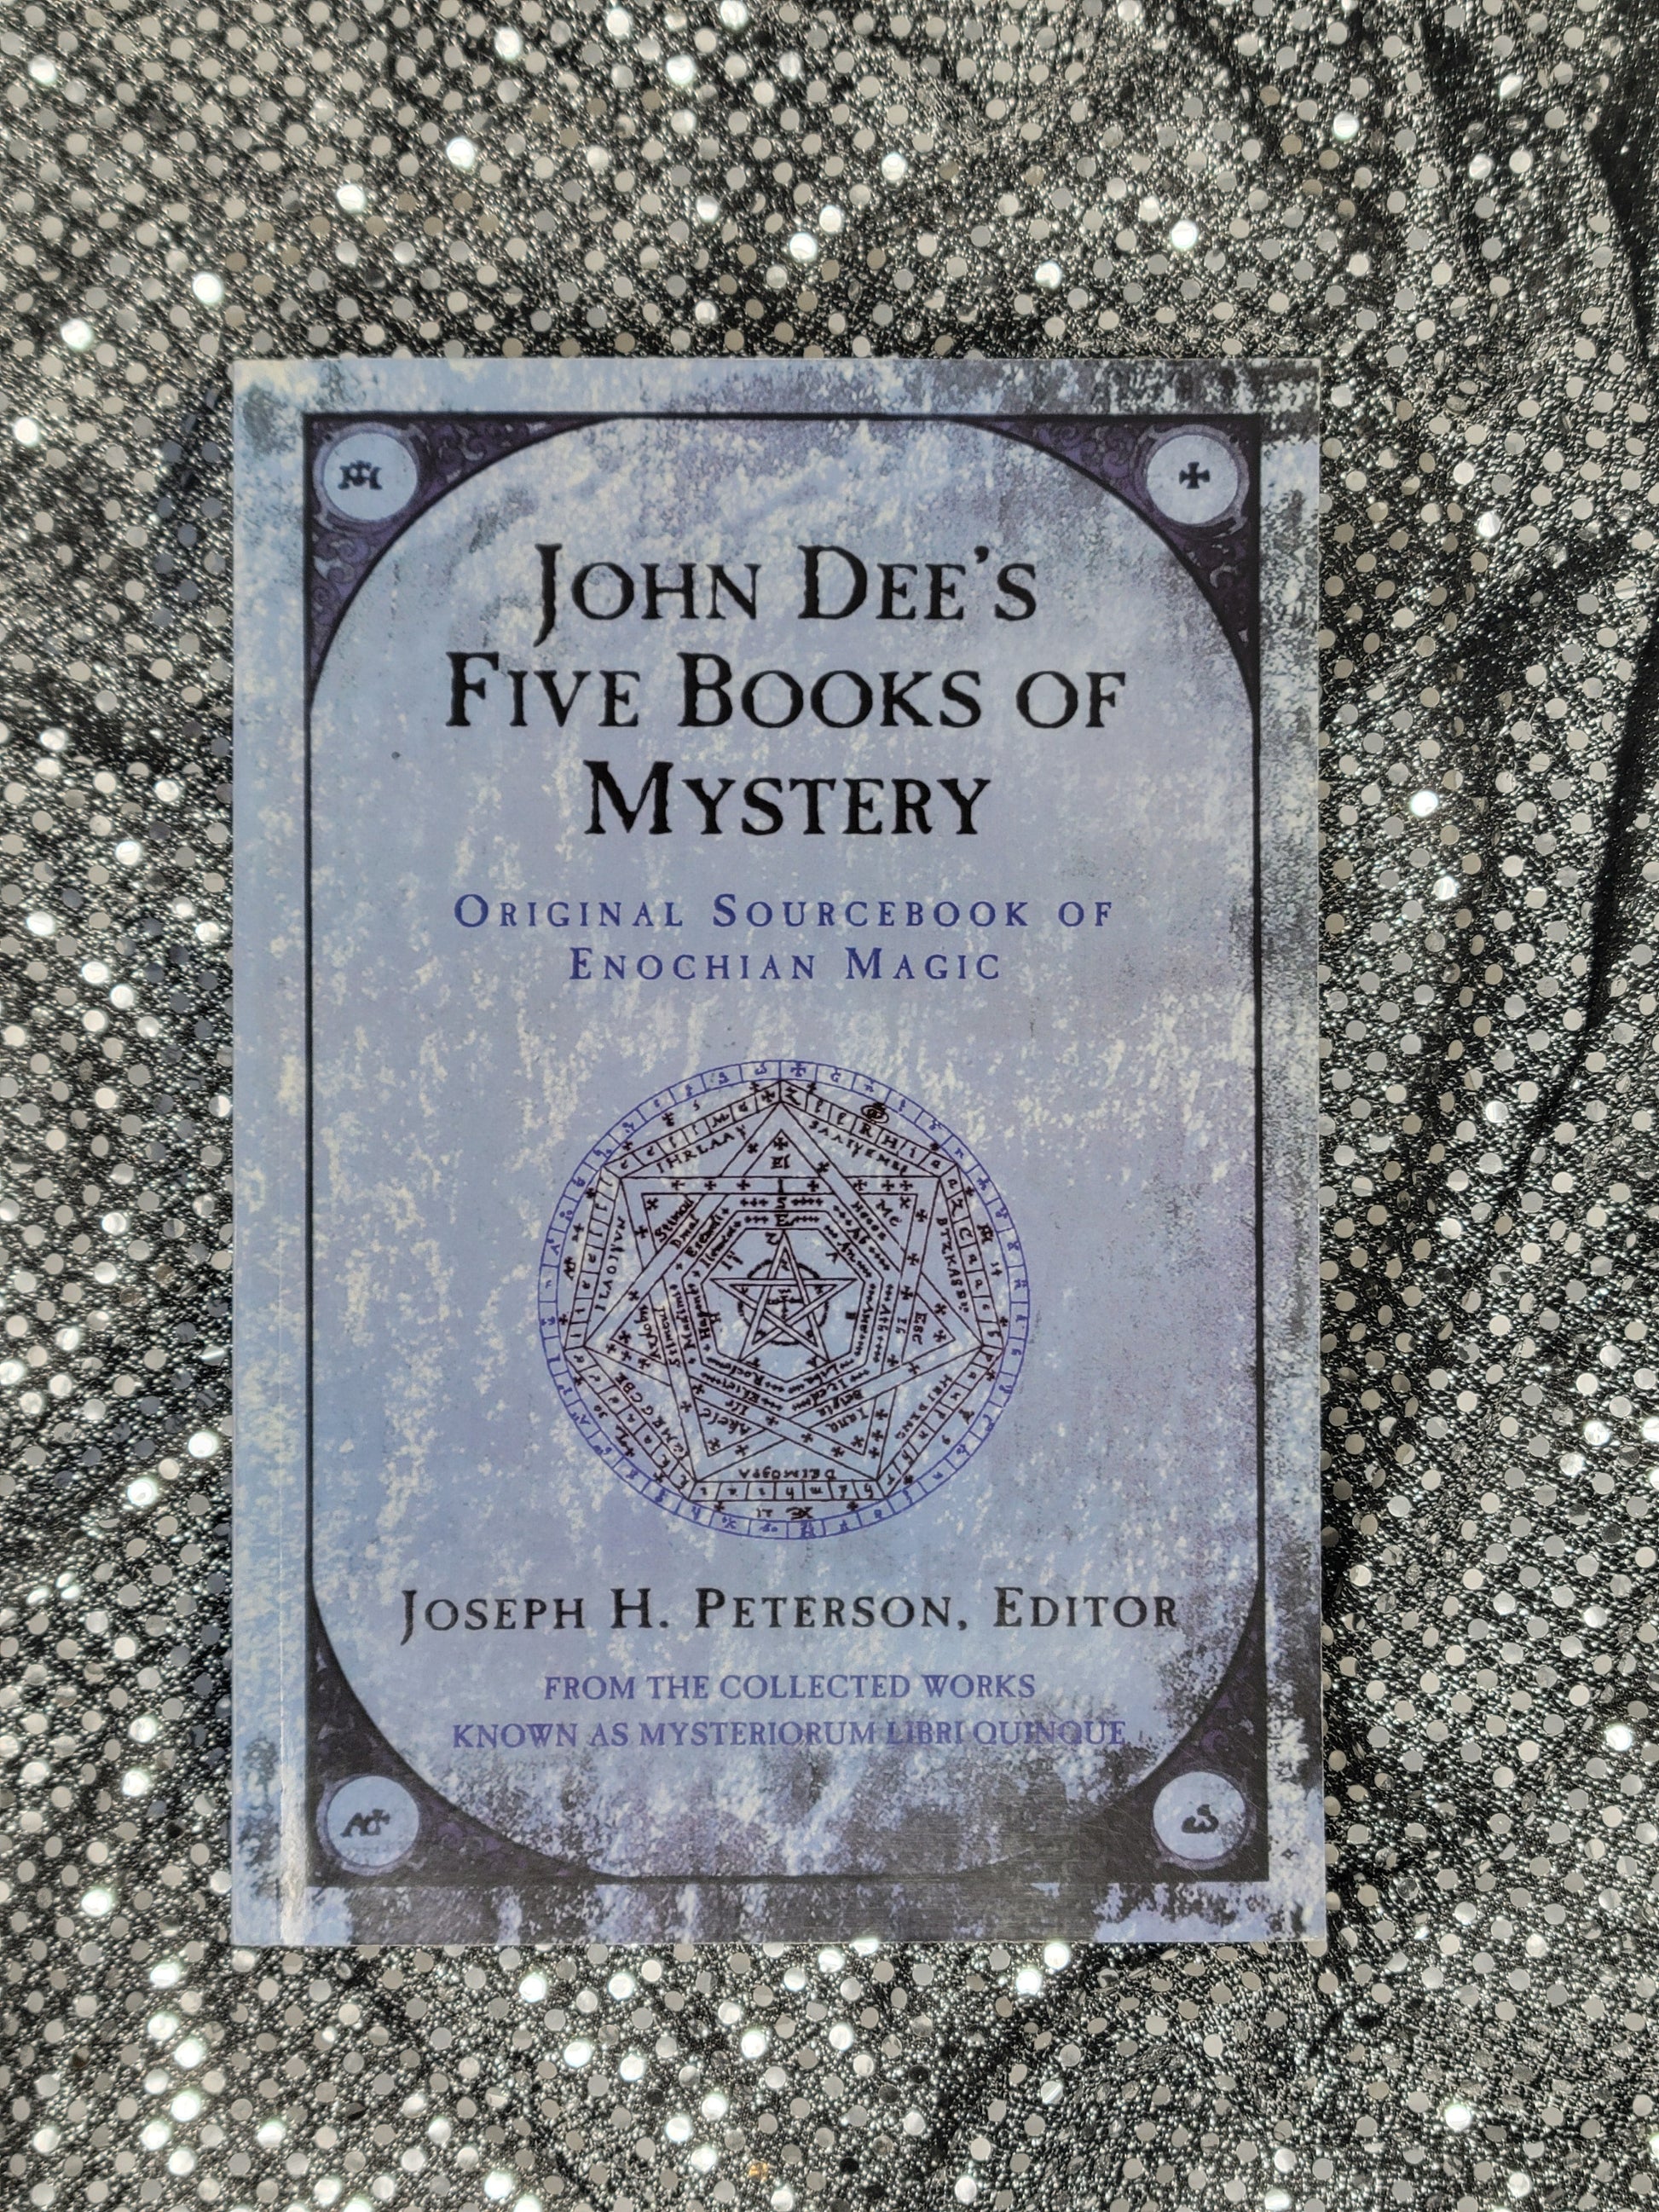 John Dee's Five Books of Mystery Original Sourcebook of Enochian Magic - Joseph H. Peterson, Editor